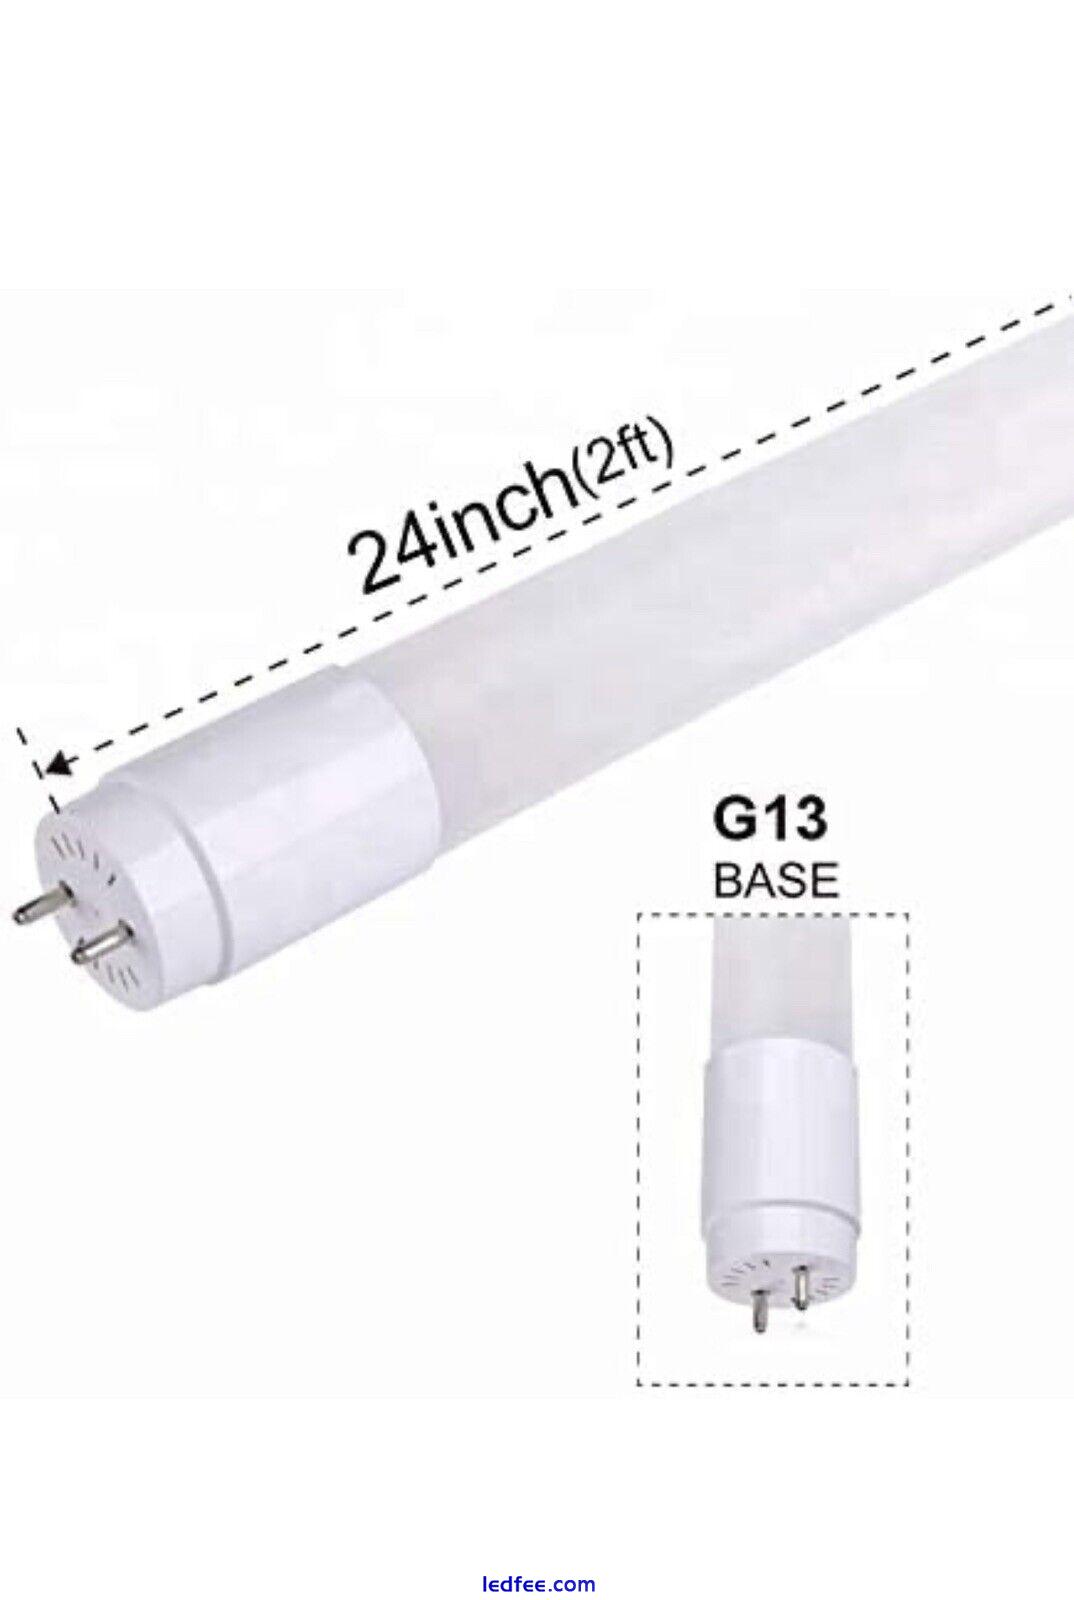 jimwhen 2 Pack T8 LED Light Tube Bulbs 2FT LED Nano Tube Light9W 18W Equiv 50... 0 